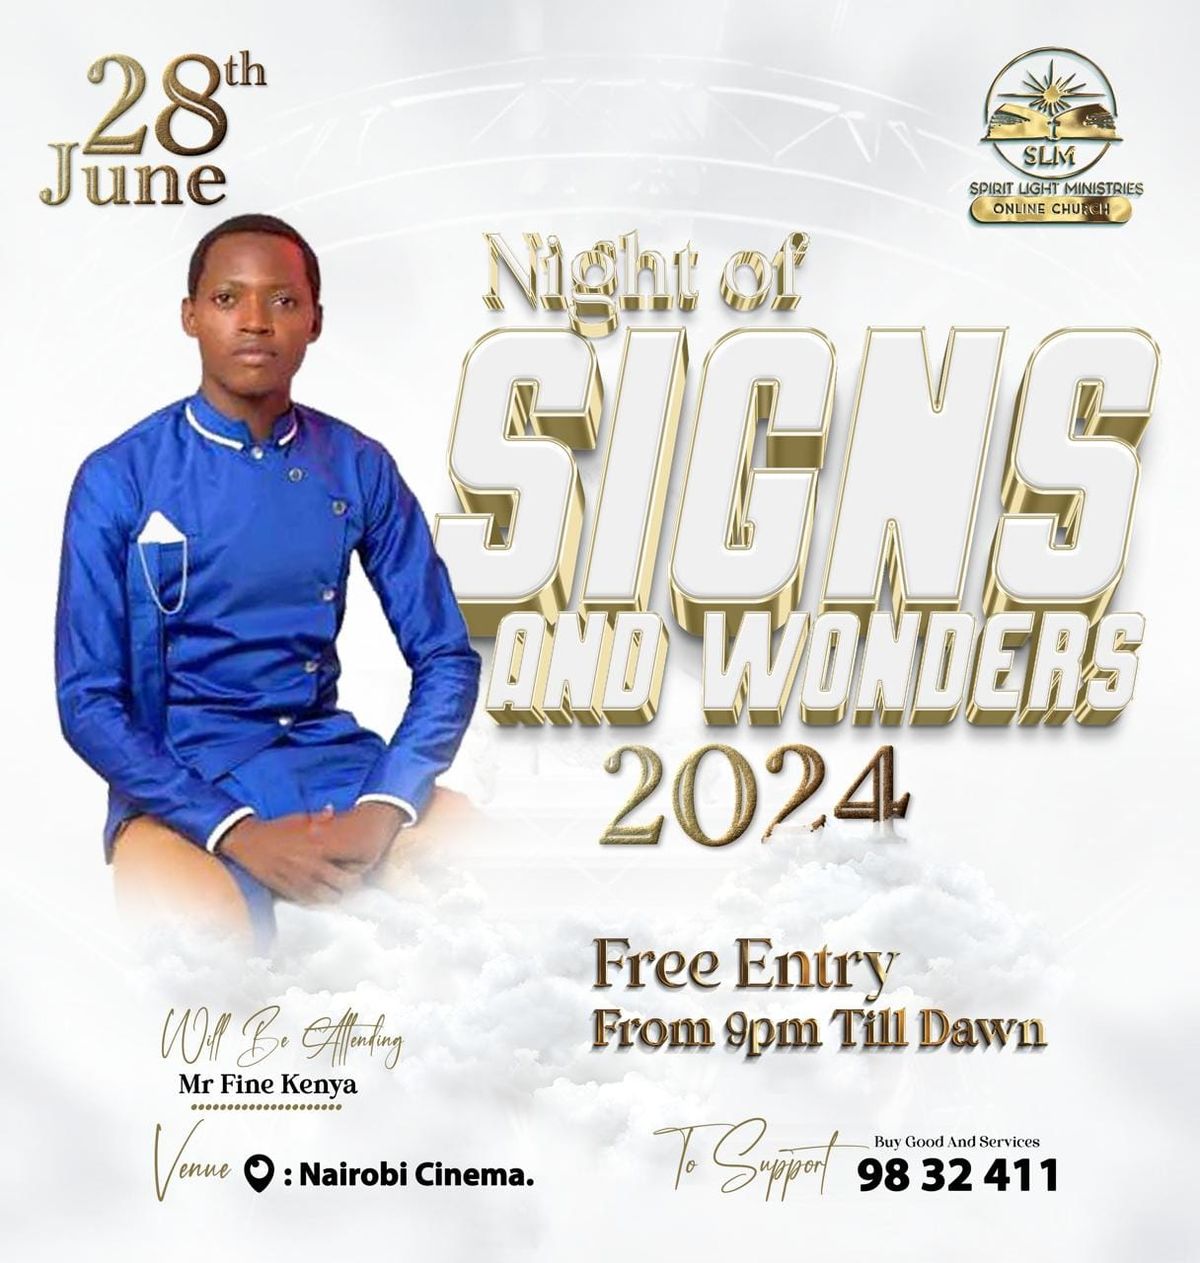 NIGHT OF SIGNS AND WONDERS NAIROBI CINEMA 28TH JUNE